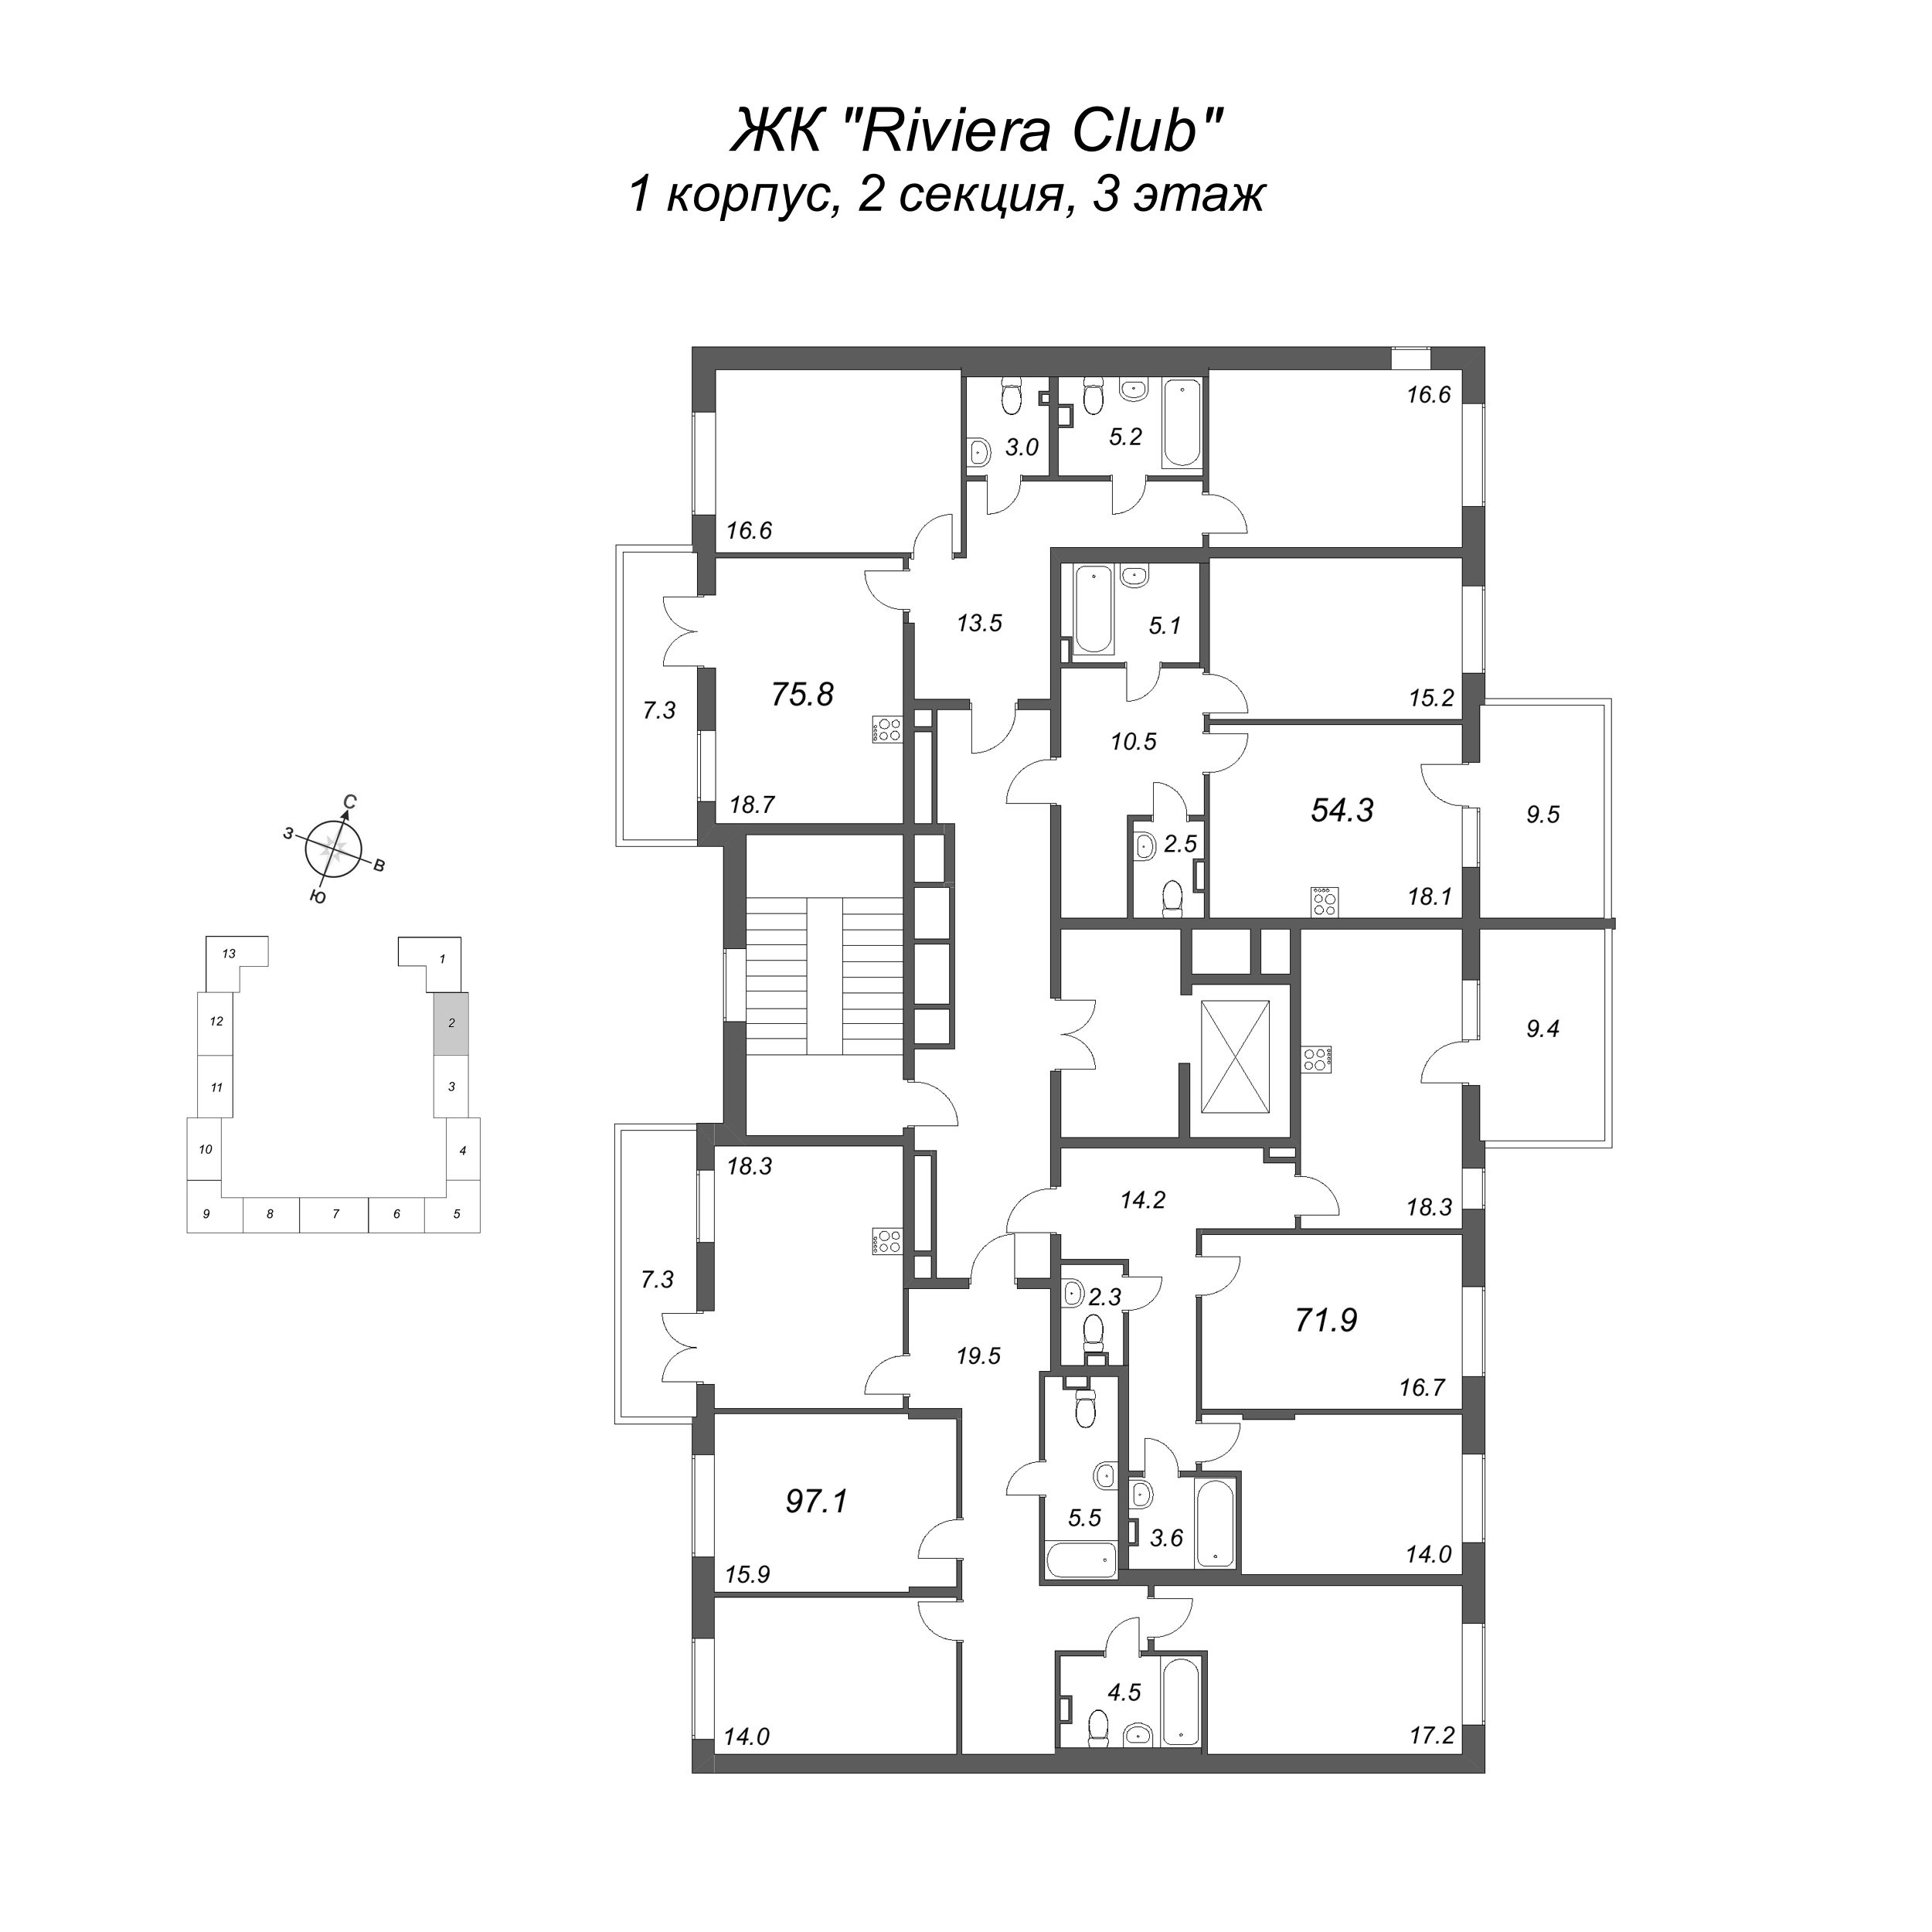 3-комнатная (Евро) квартира, 71.9 м² в ЖК "Riviera Club" - планировка этажа